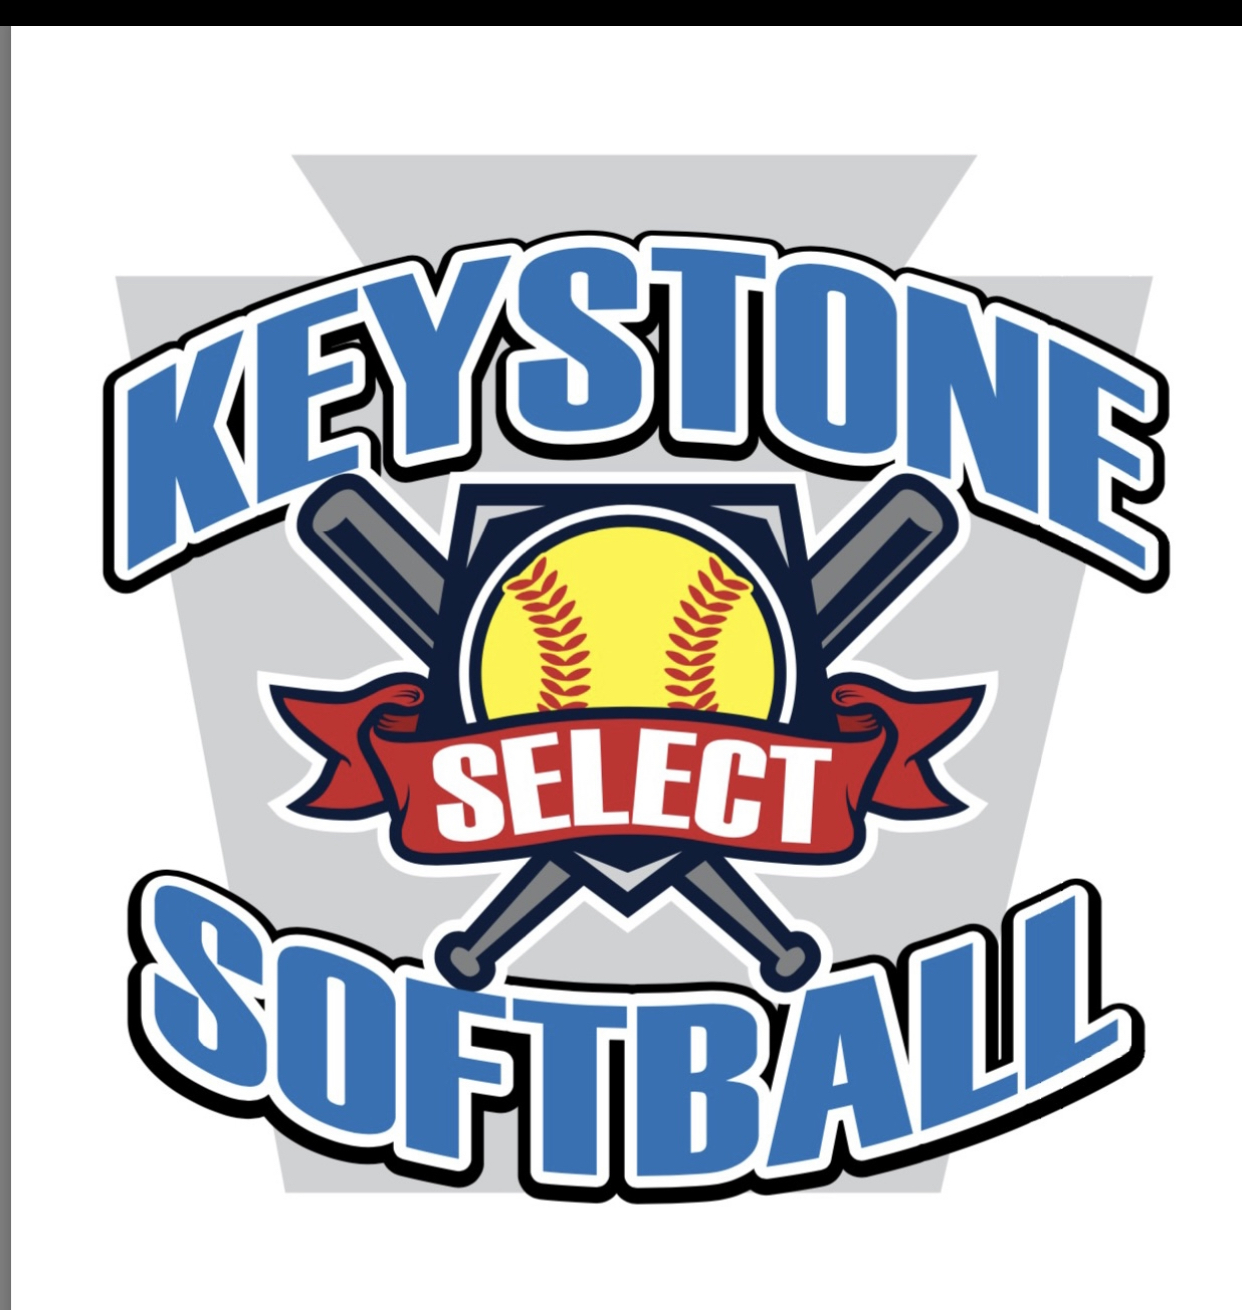 Keystone Select Softball Mountain Valley Madness Logo